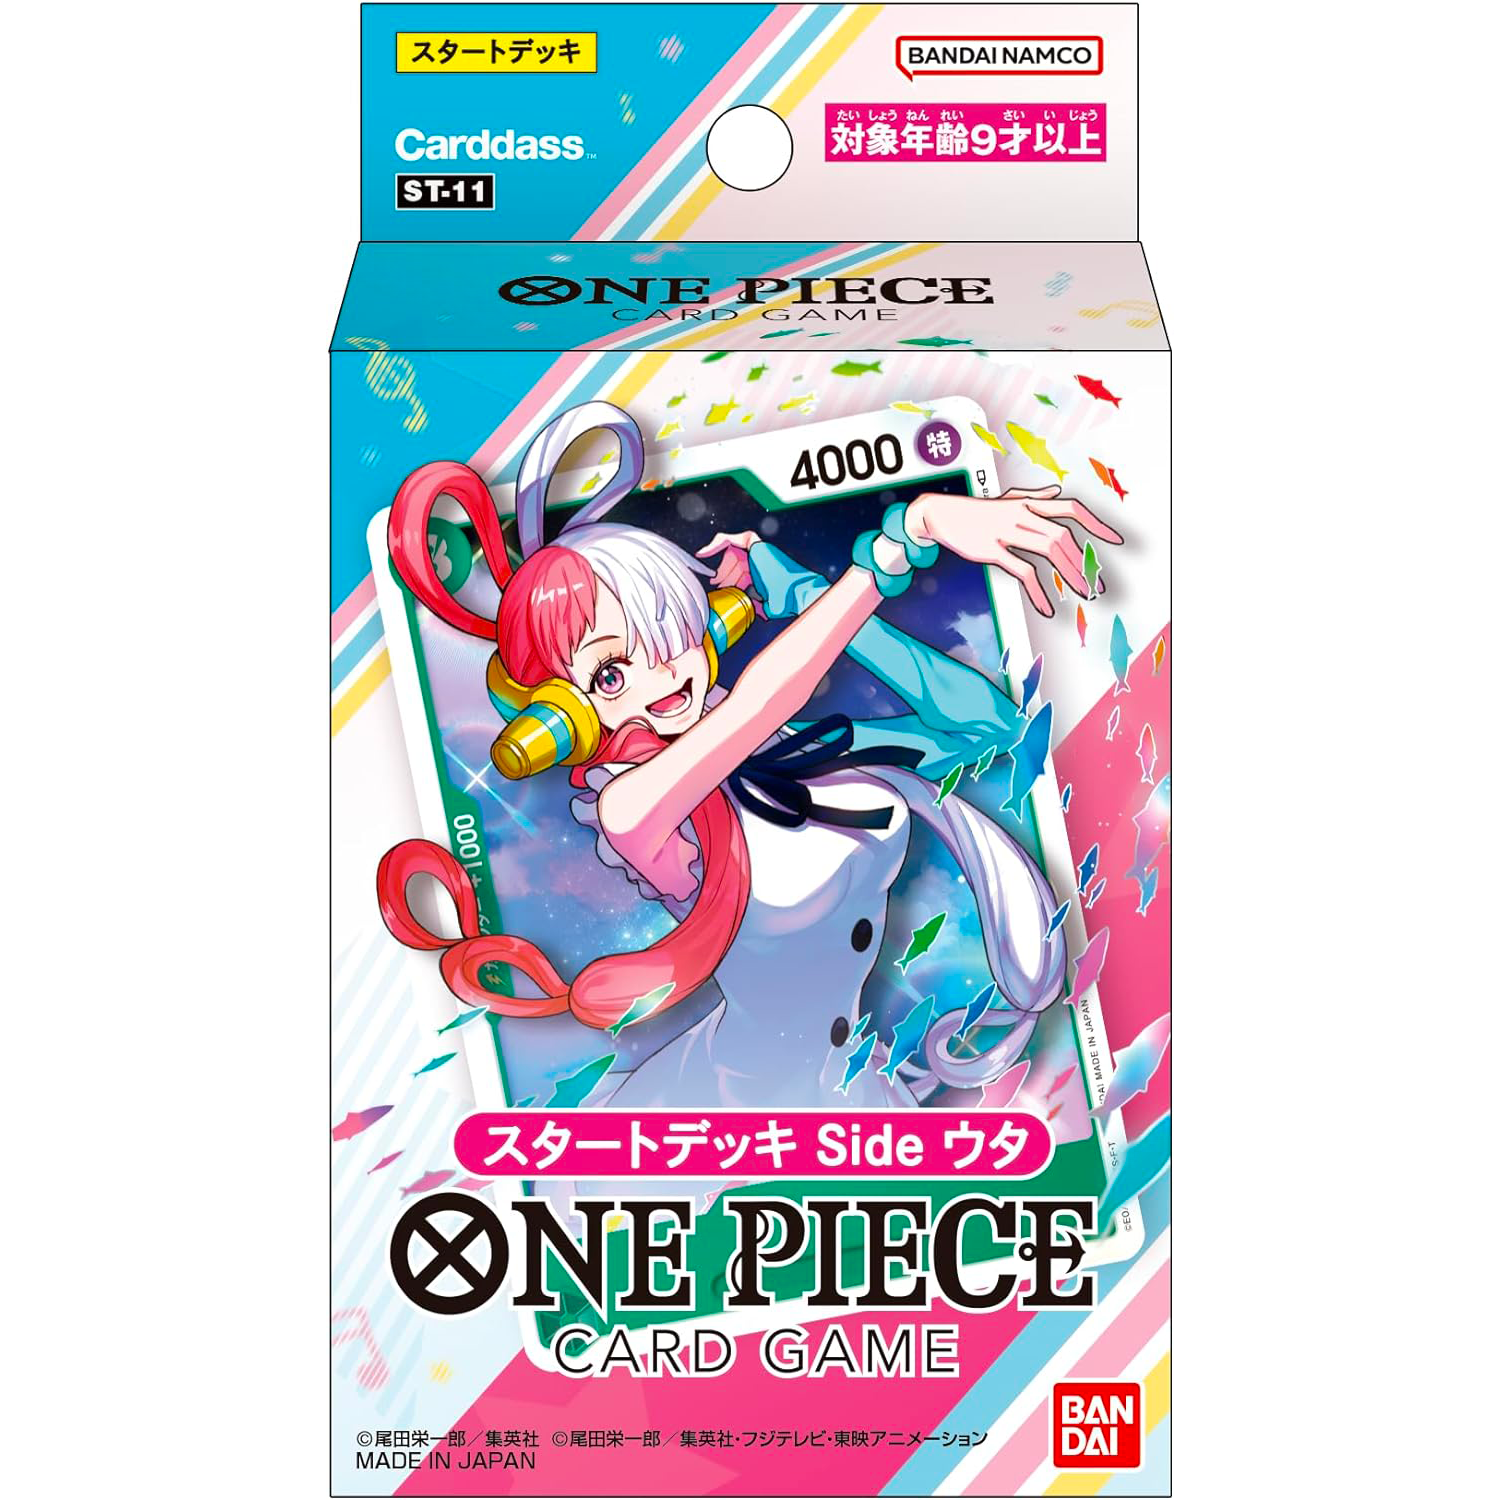 One Piece Big Mom Pirates Card Game 6 Starter Decks Per Box, One Piece TCG